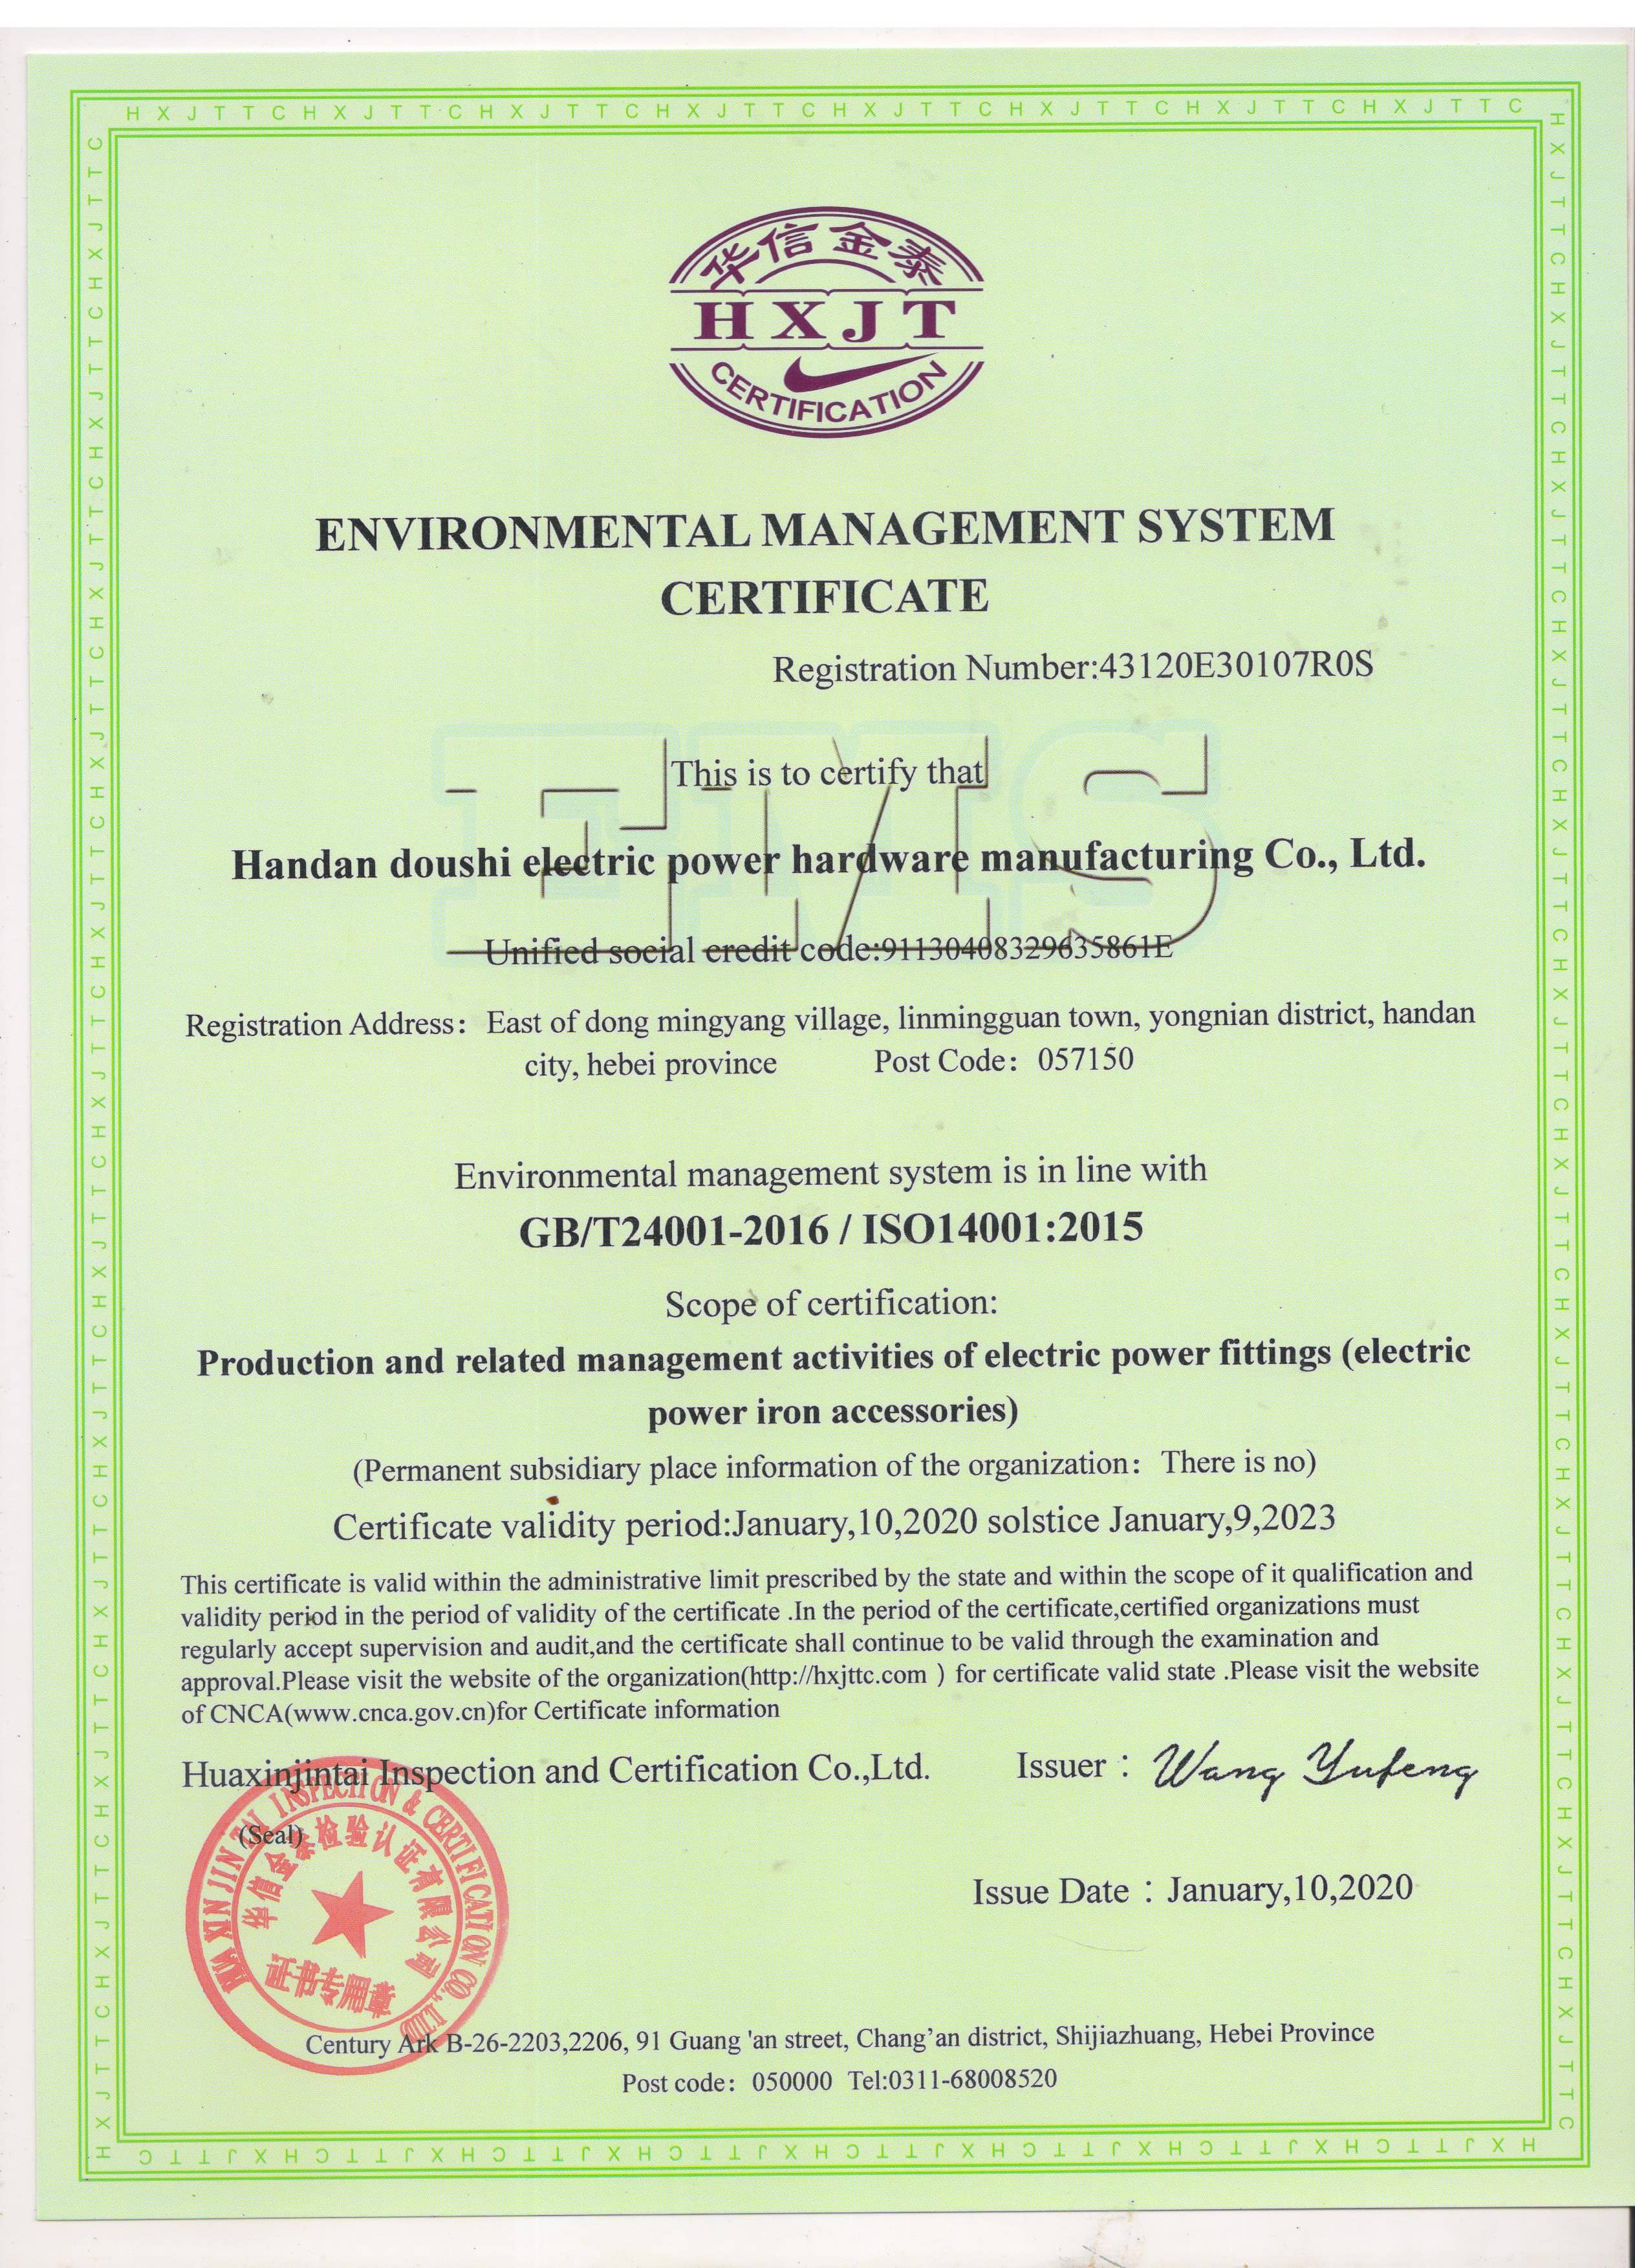 Honorary certificate (1)